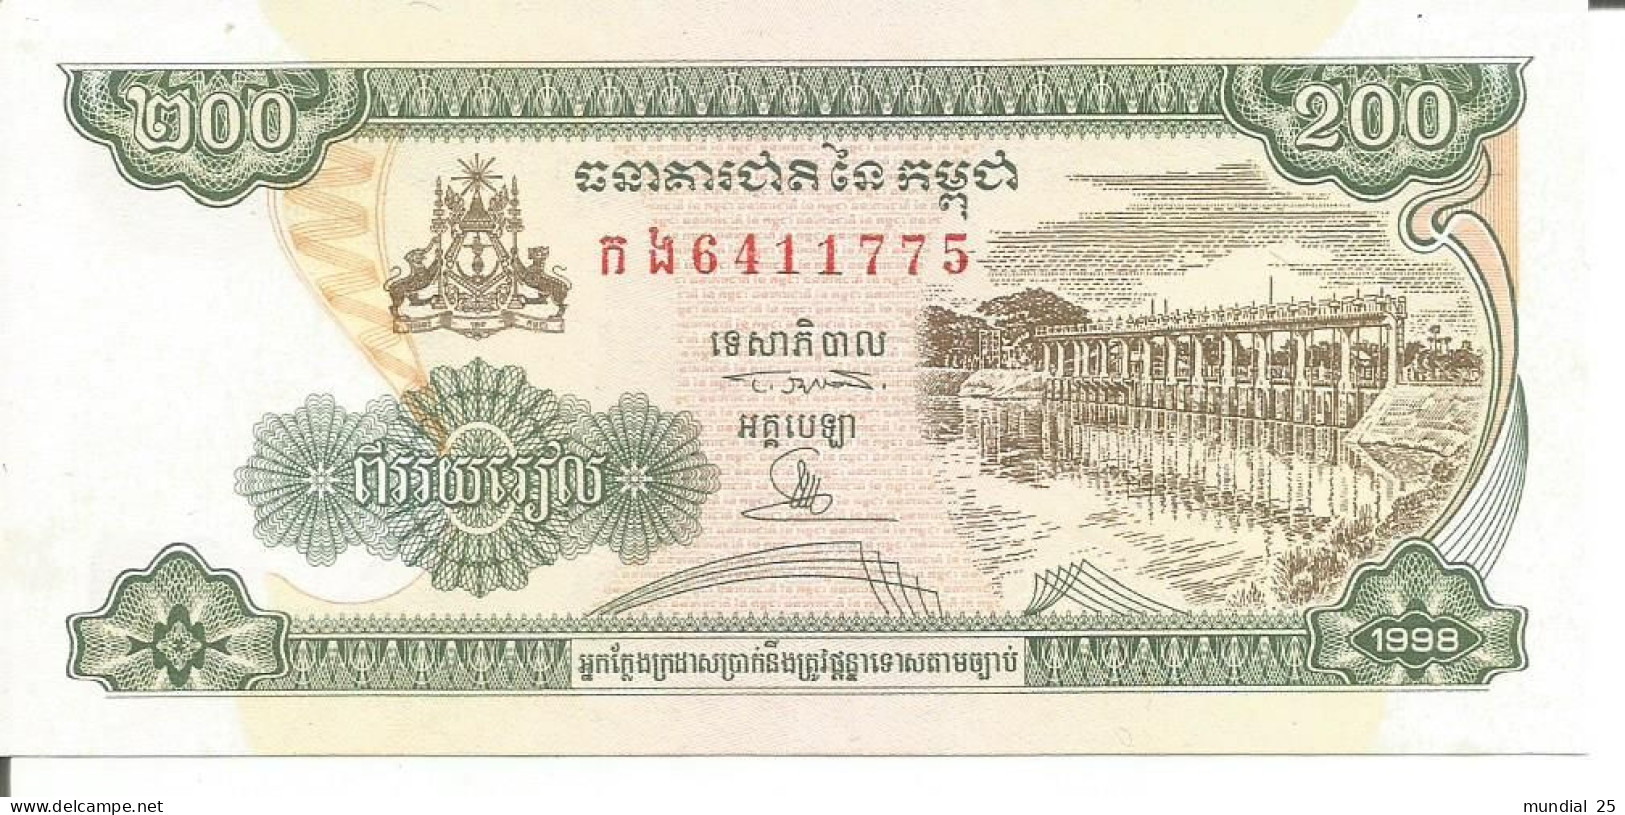 2 CAMBODIA NOTES 200 RIELS 1998 - Cambodge